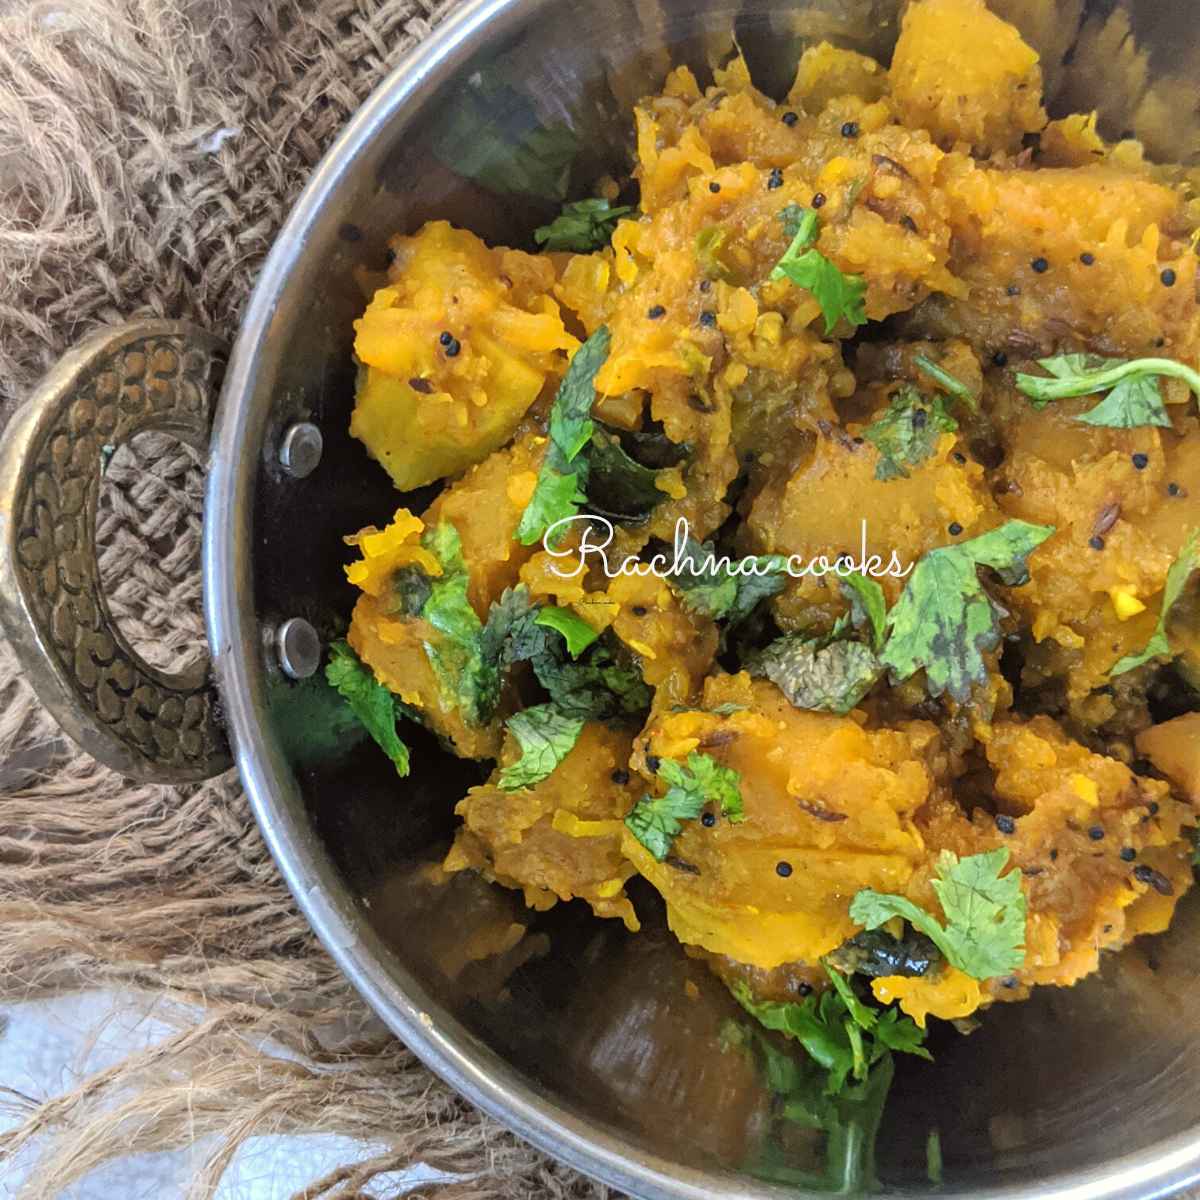 Receta india de curry de calabaza